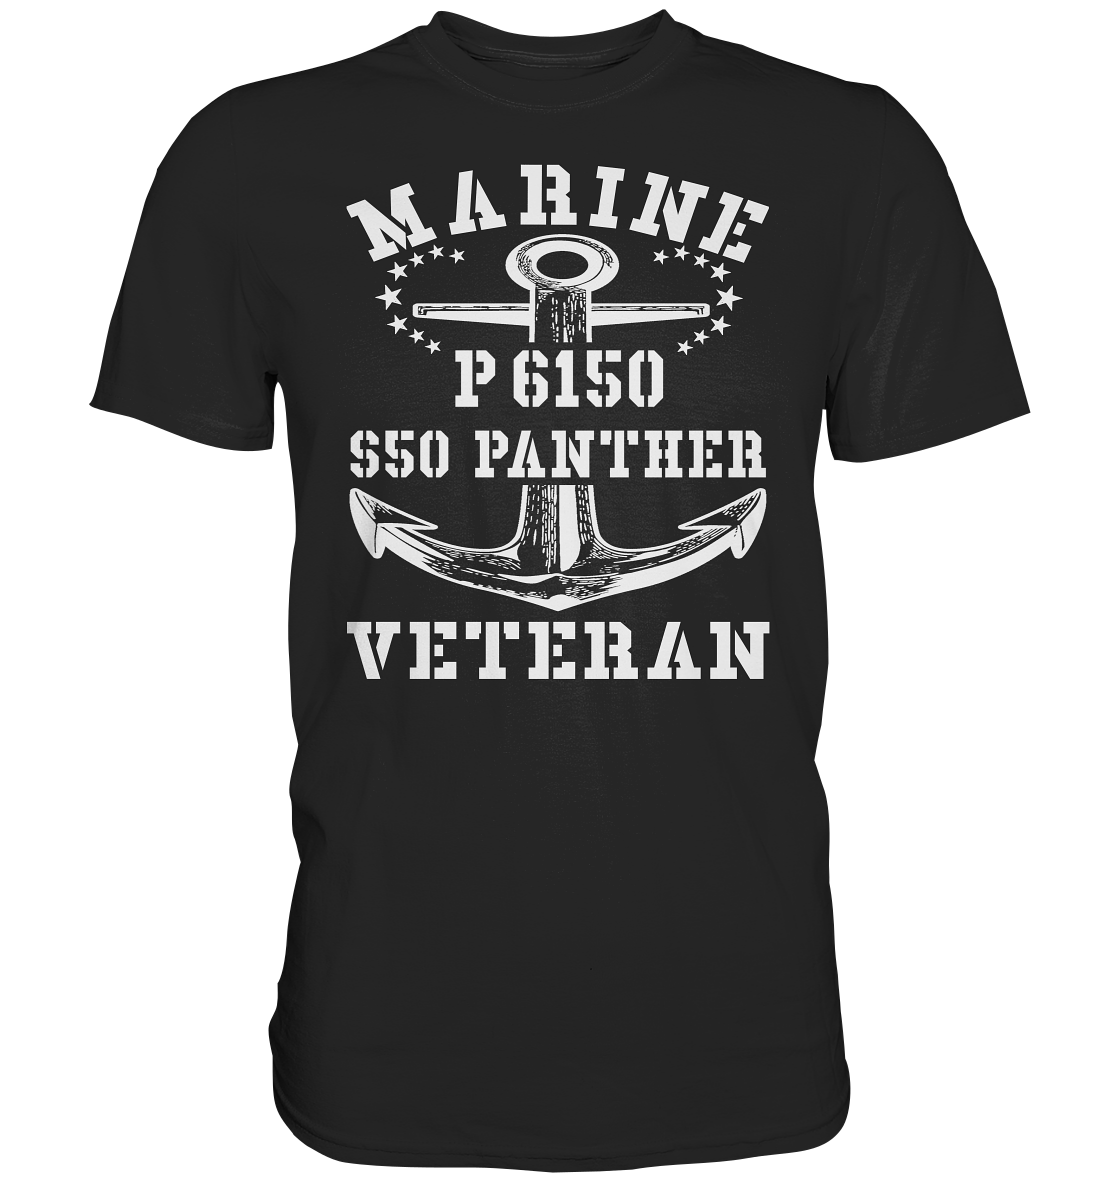 P6150 S50 PANTHER Marine Veteran - Premium Shirt